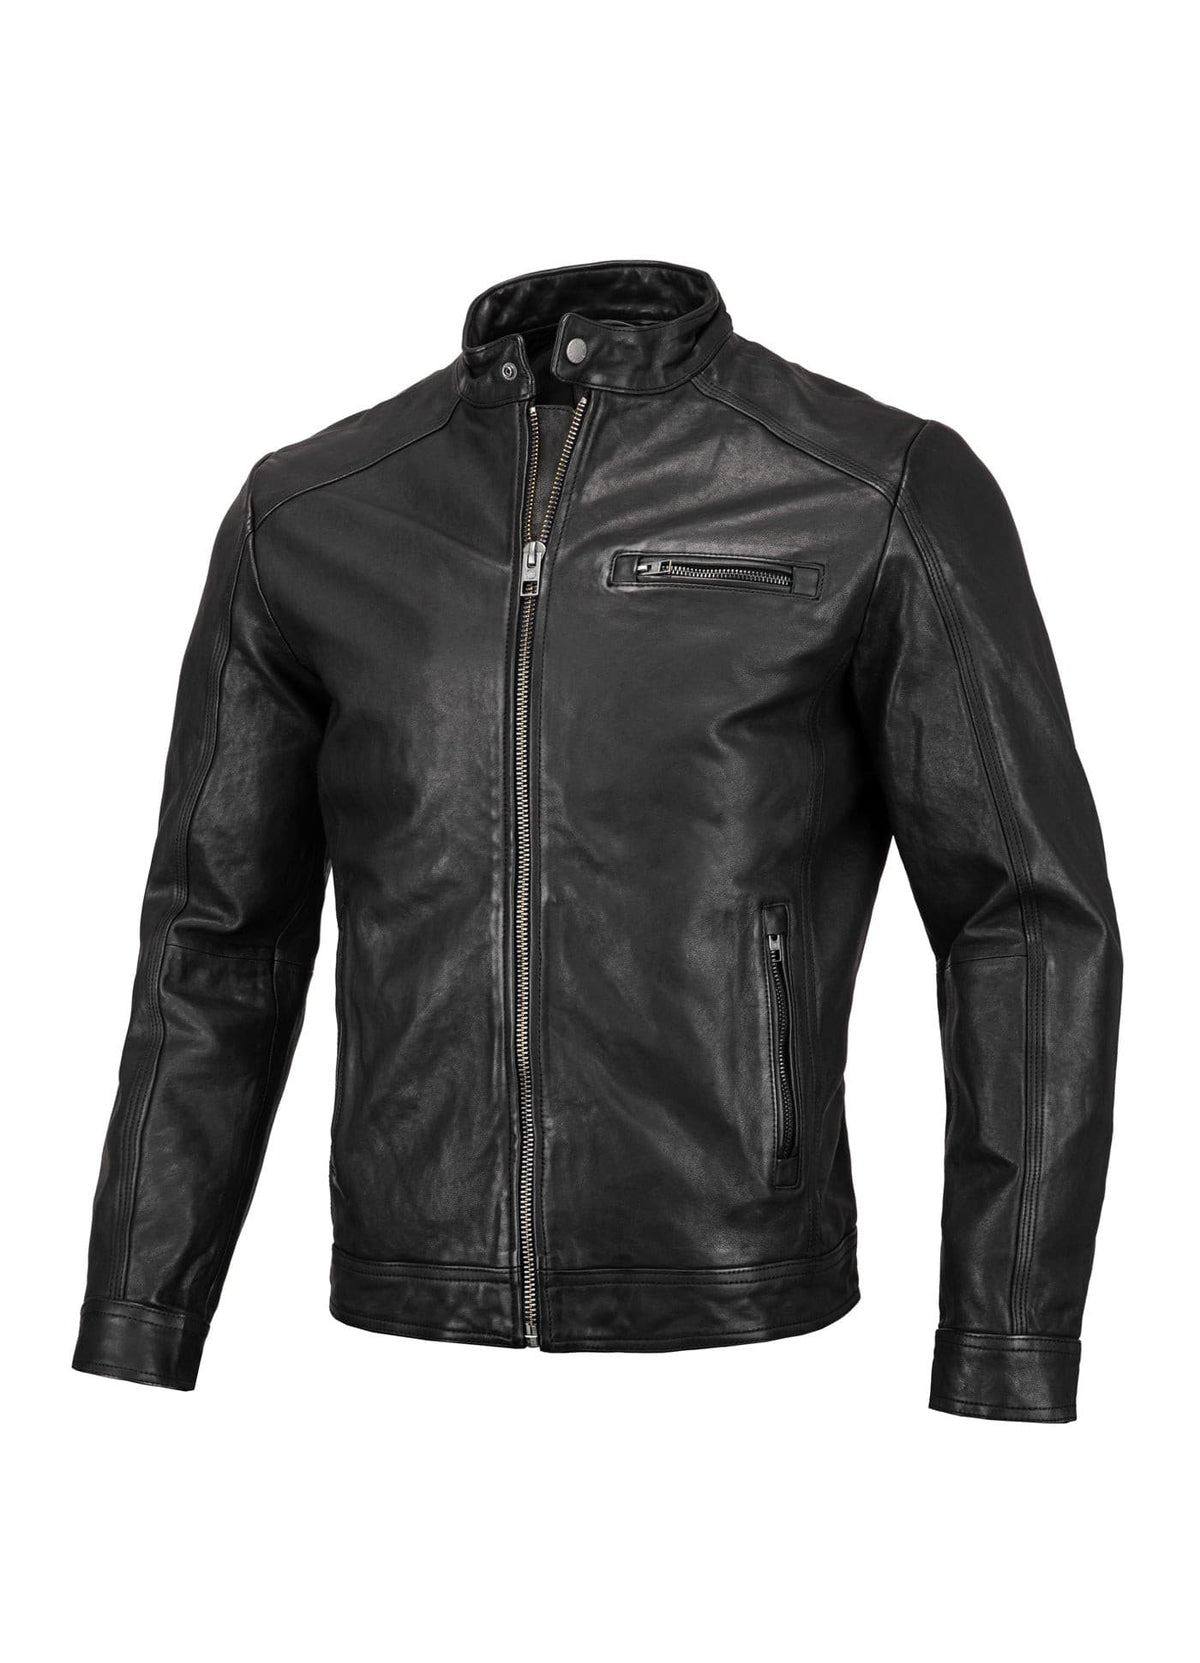 HOOPER Black Leather Jacket.